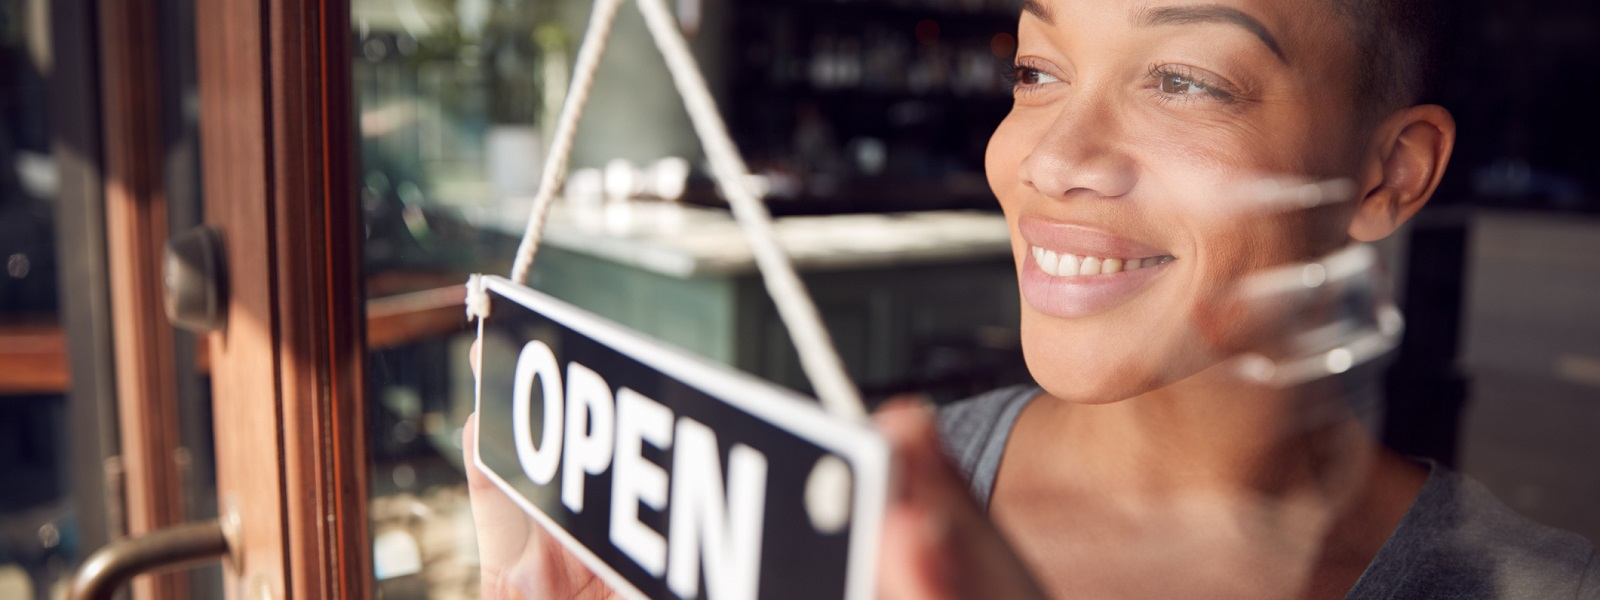 Female entrepreneur with shop open sign